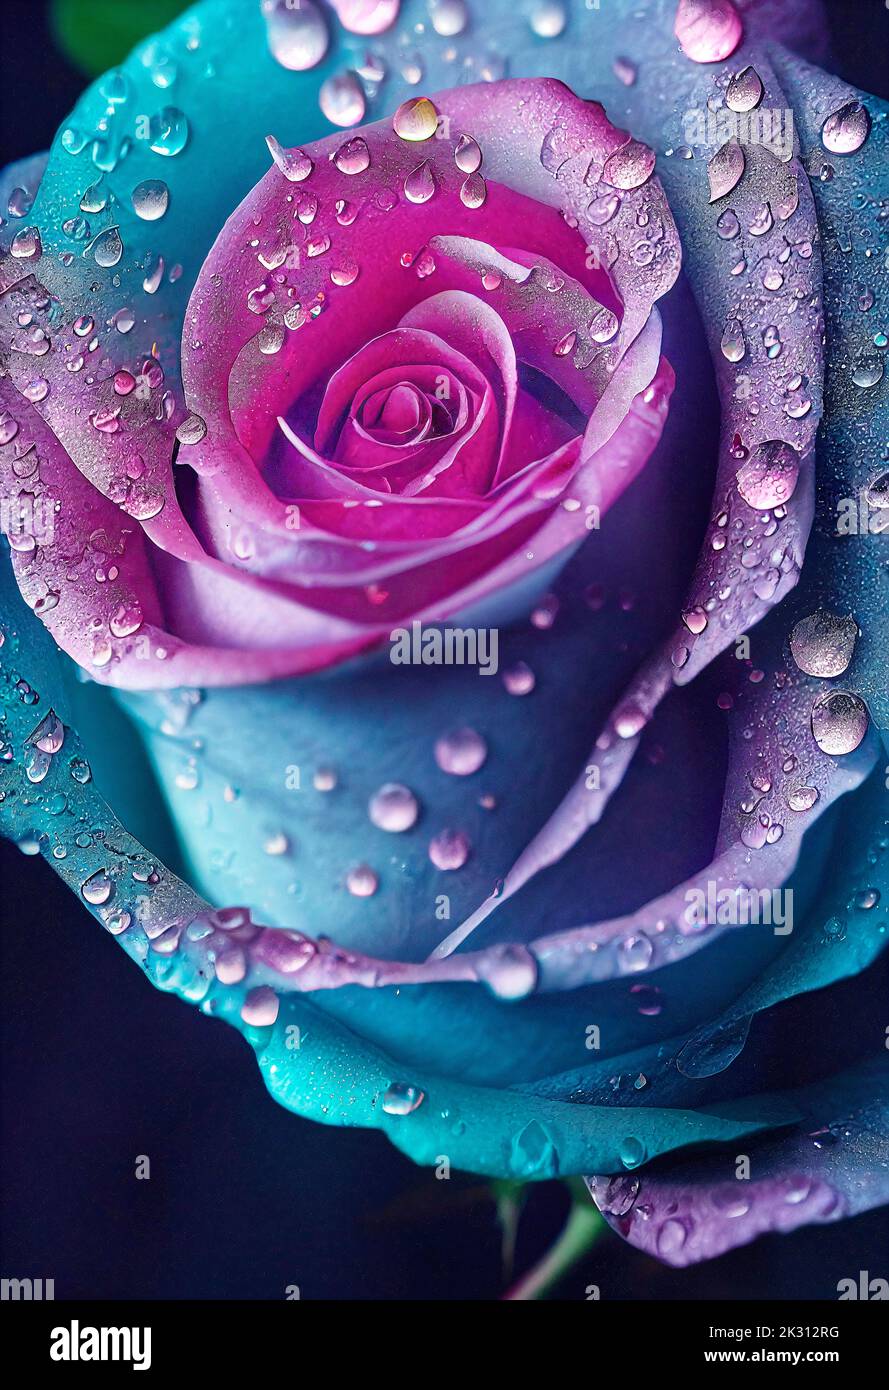 Cabeza de rosa azul y rosa cubierta de gotas de lluvia Foto de stock